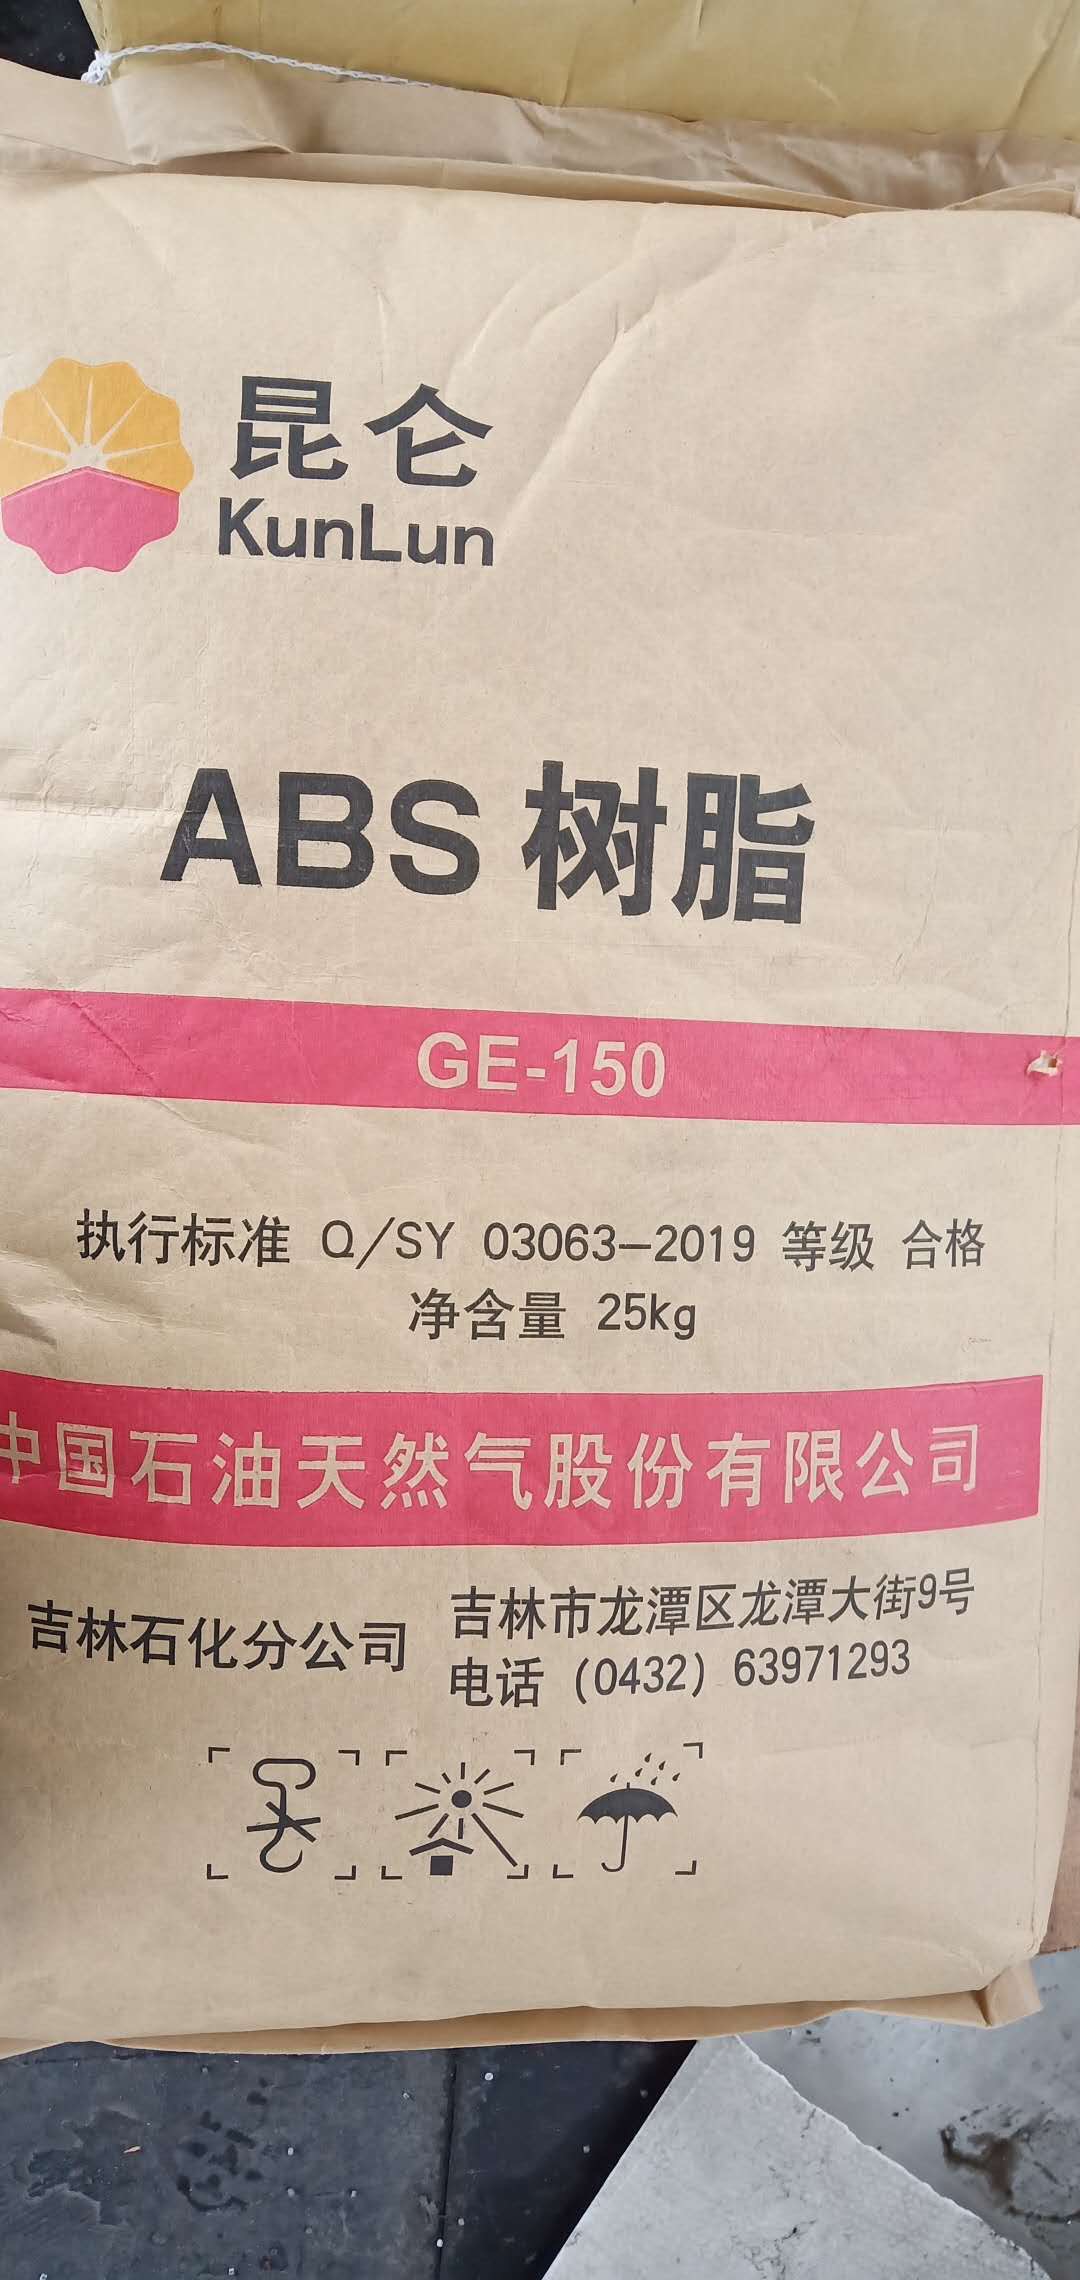 GE-150中石油吉林 昆仑ABS树脂